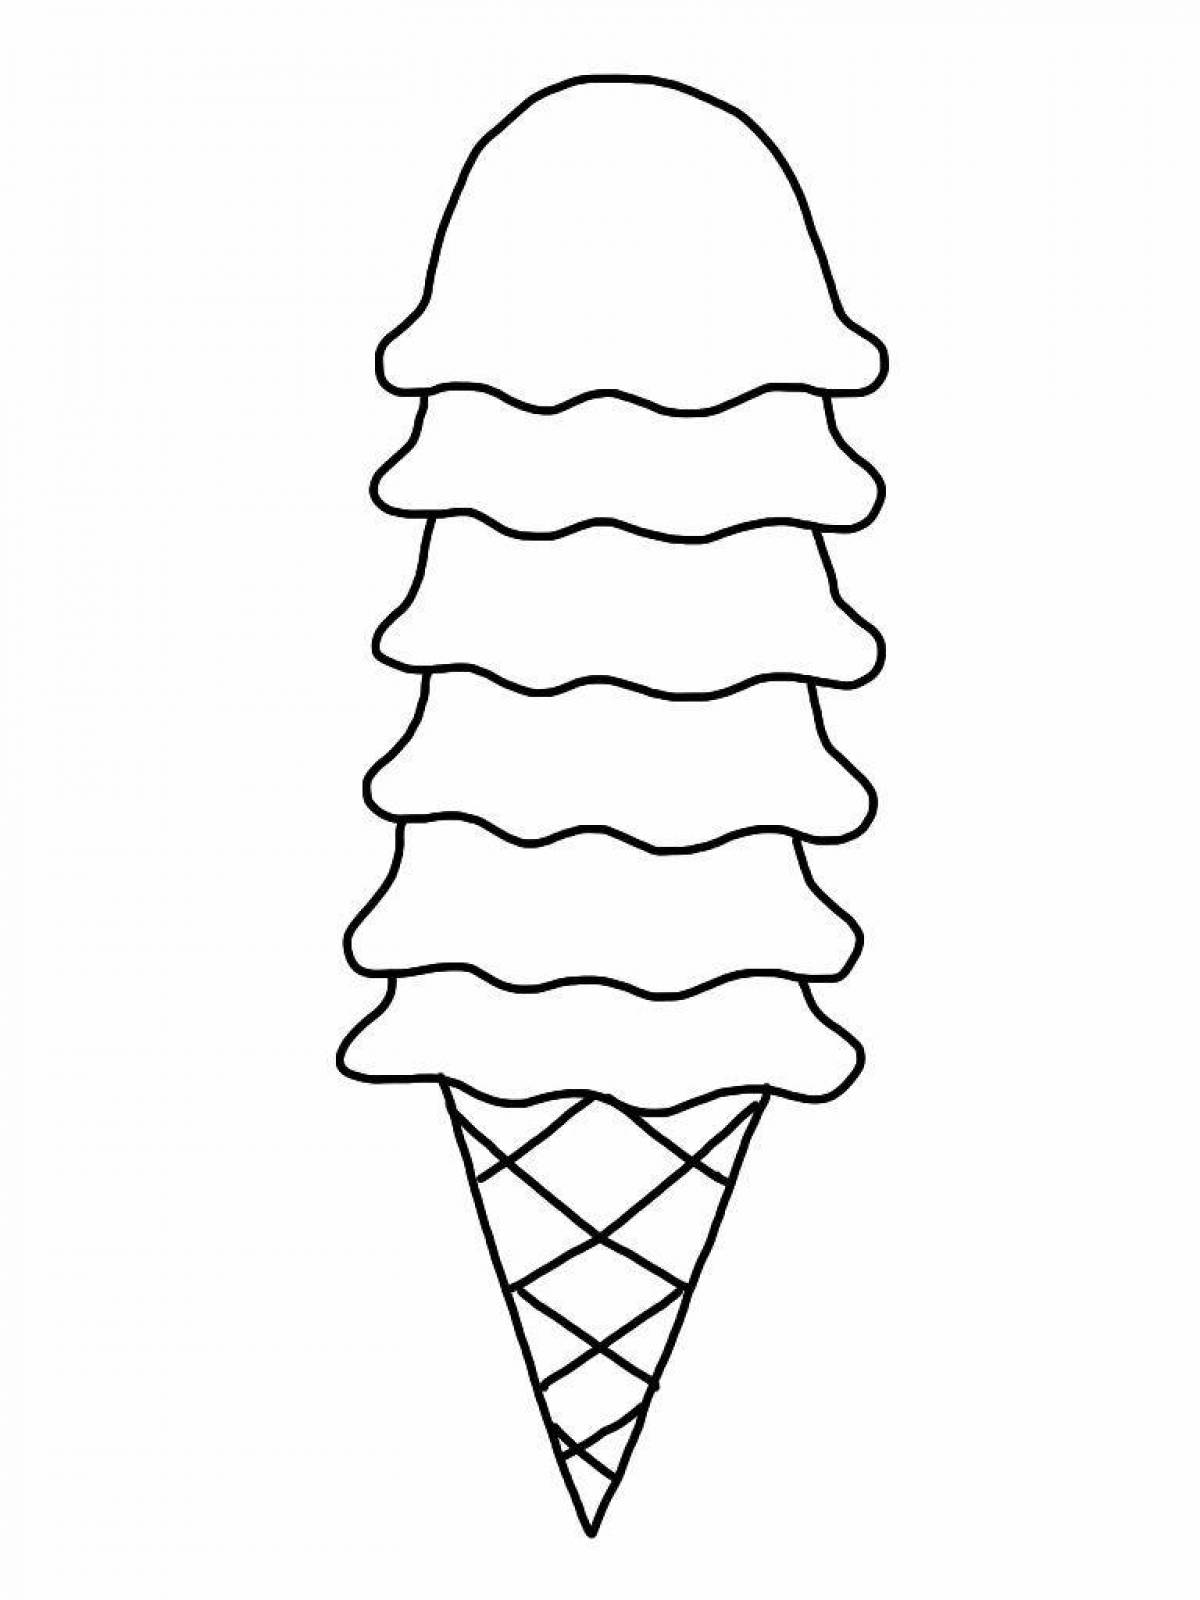 Colouring irresistible ice cream